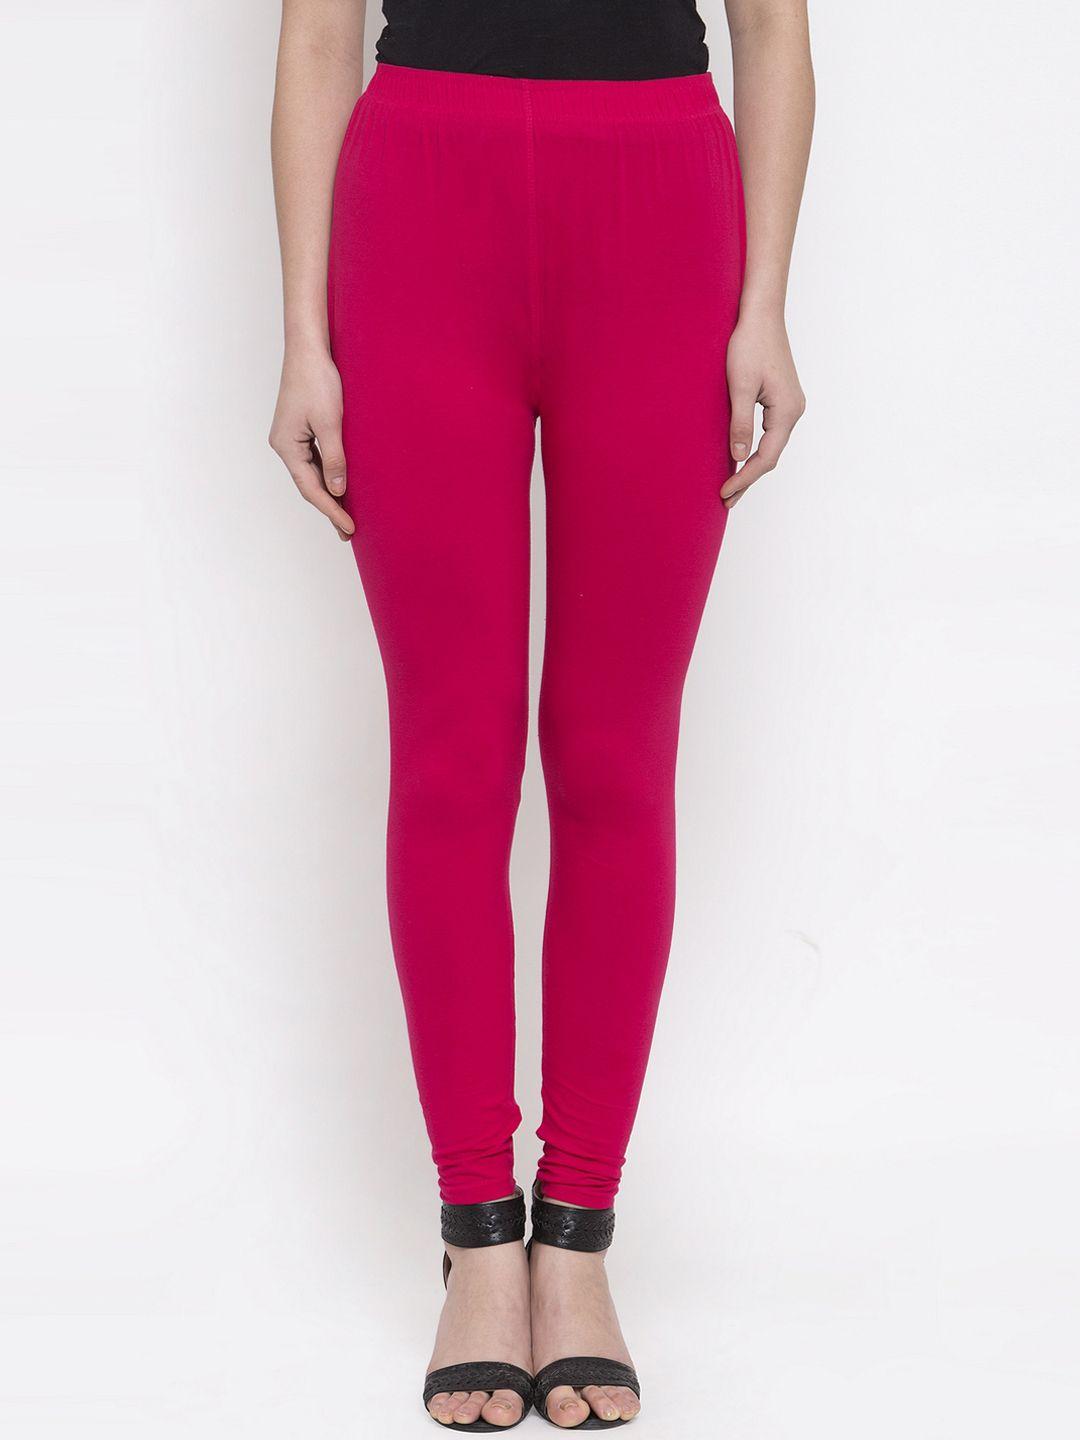 tag 7 women pink solid churidar-length leggings